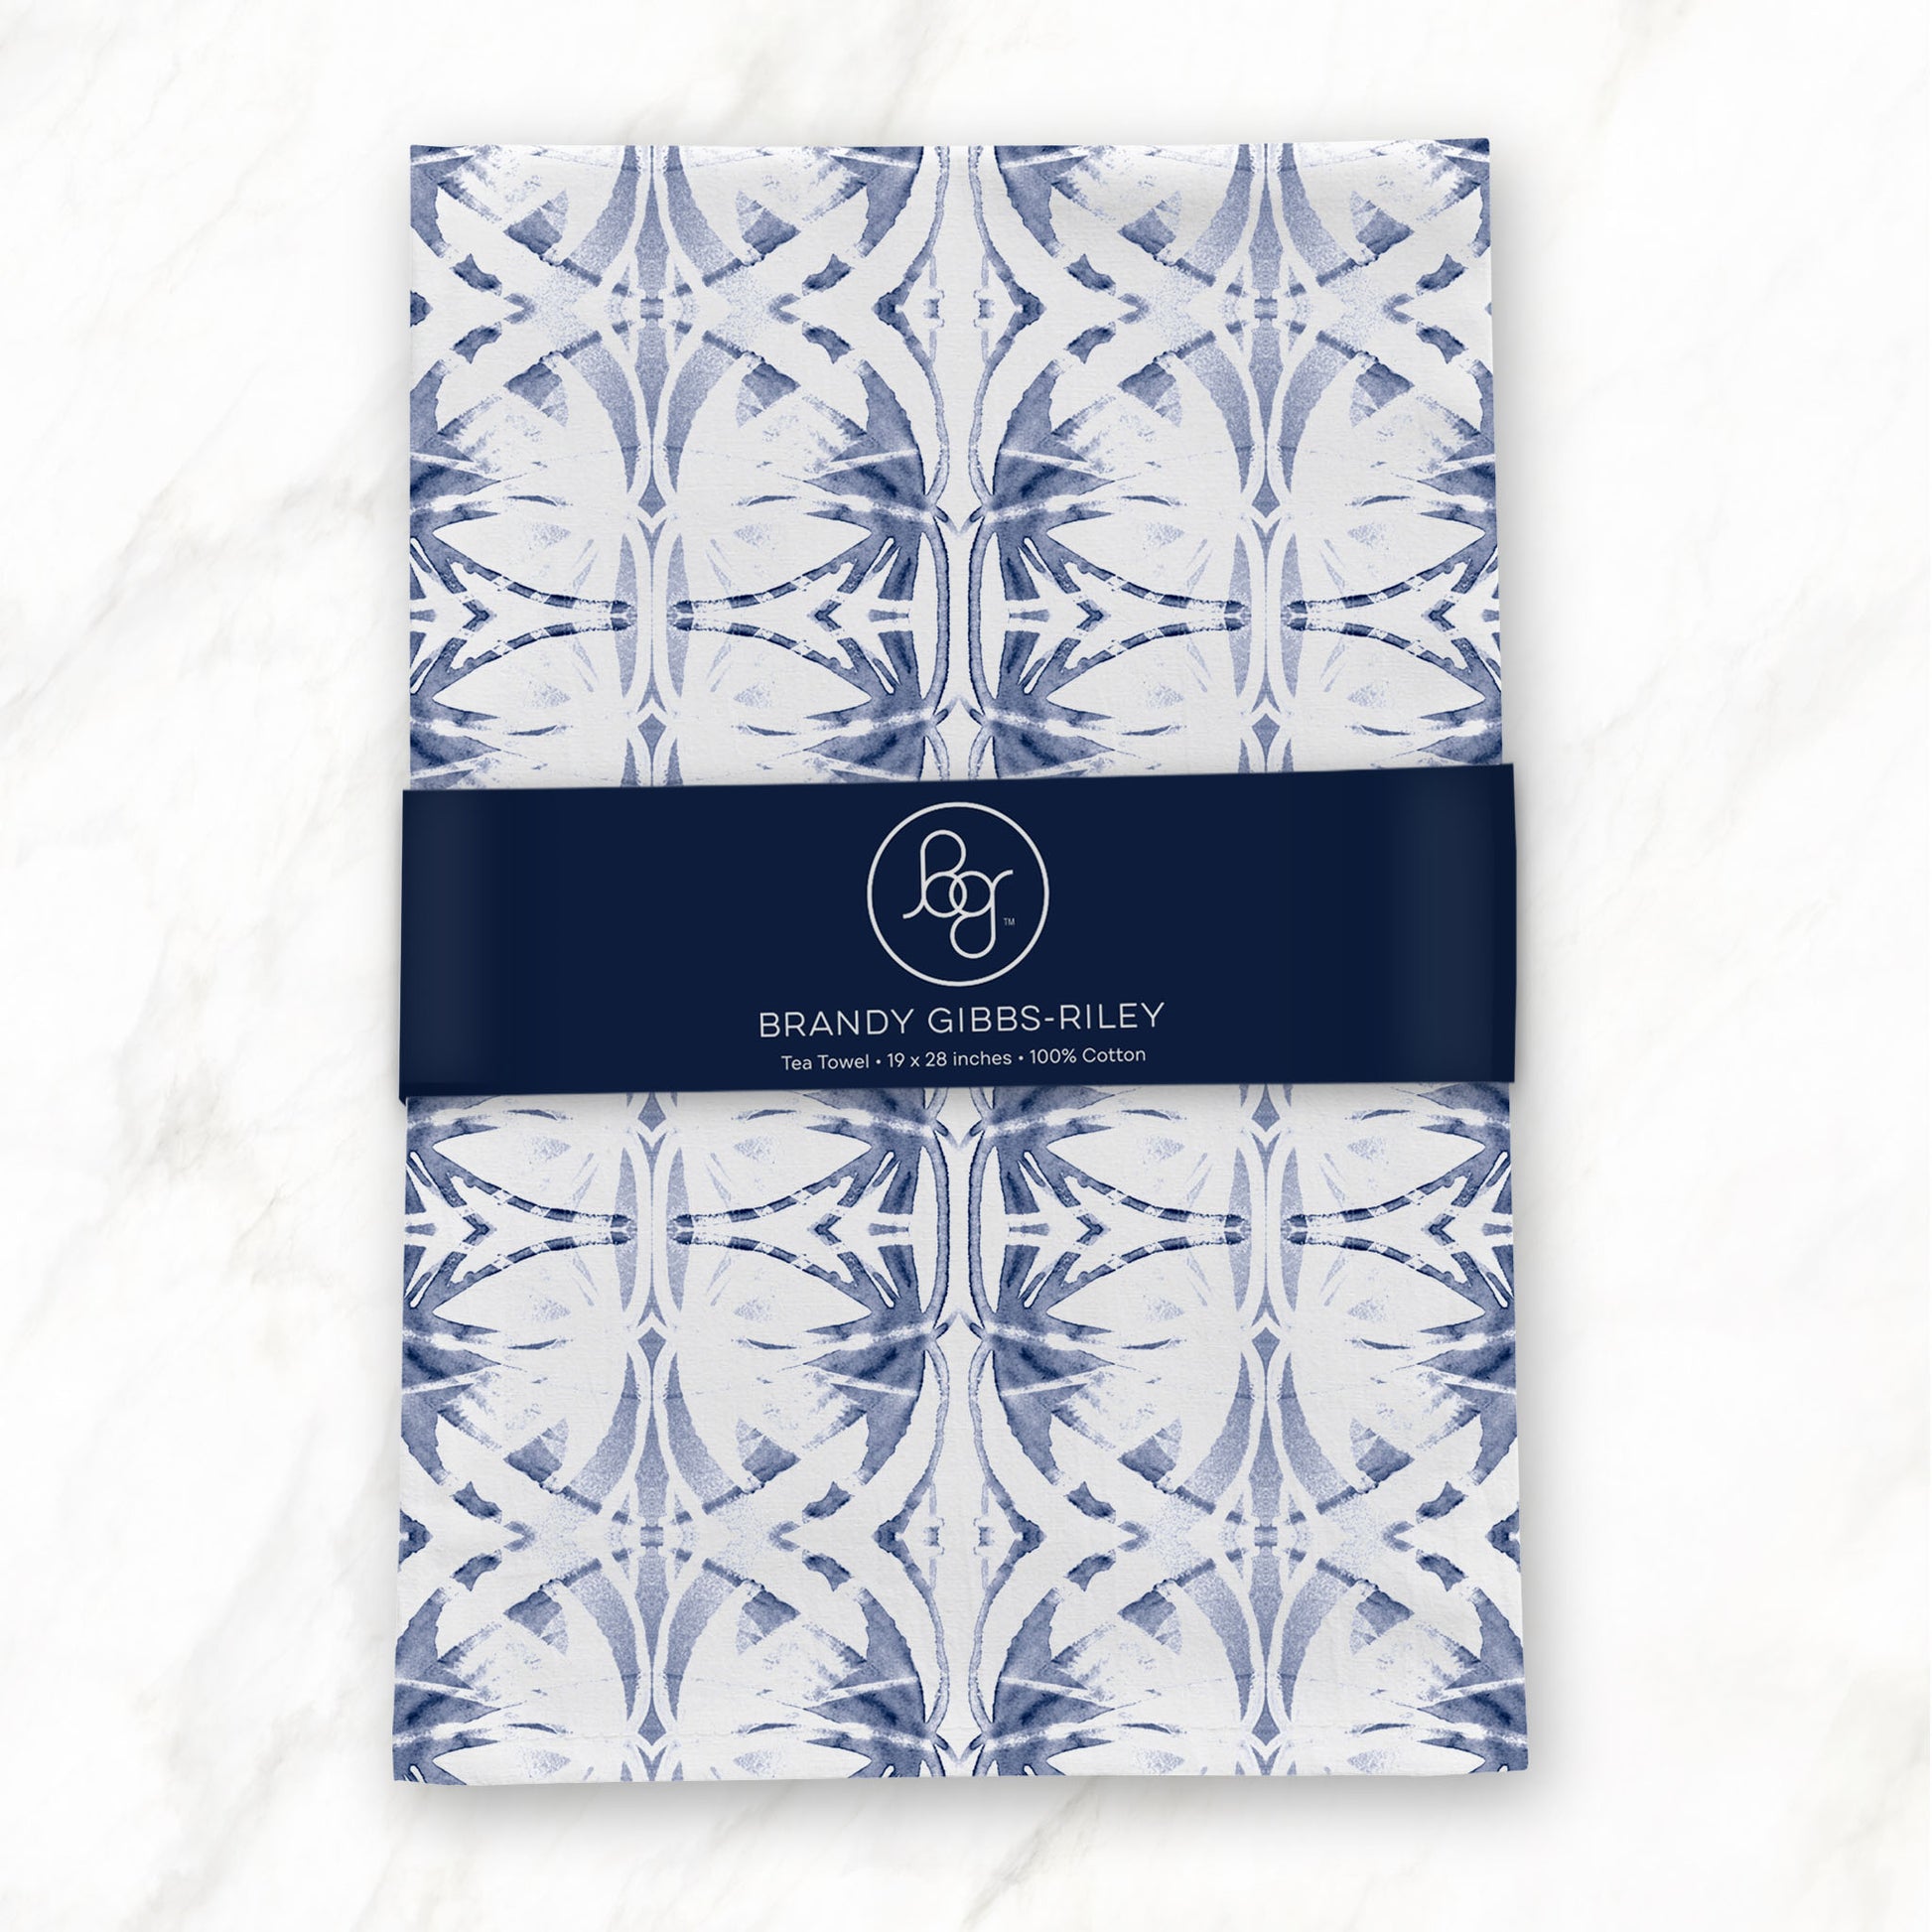 Flour sack tea towel featuring a light blue abstract pattern